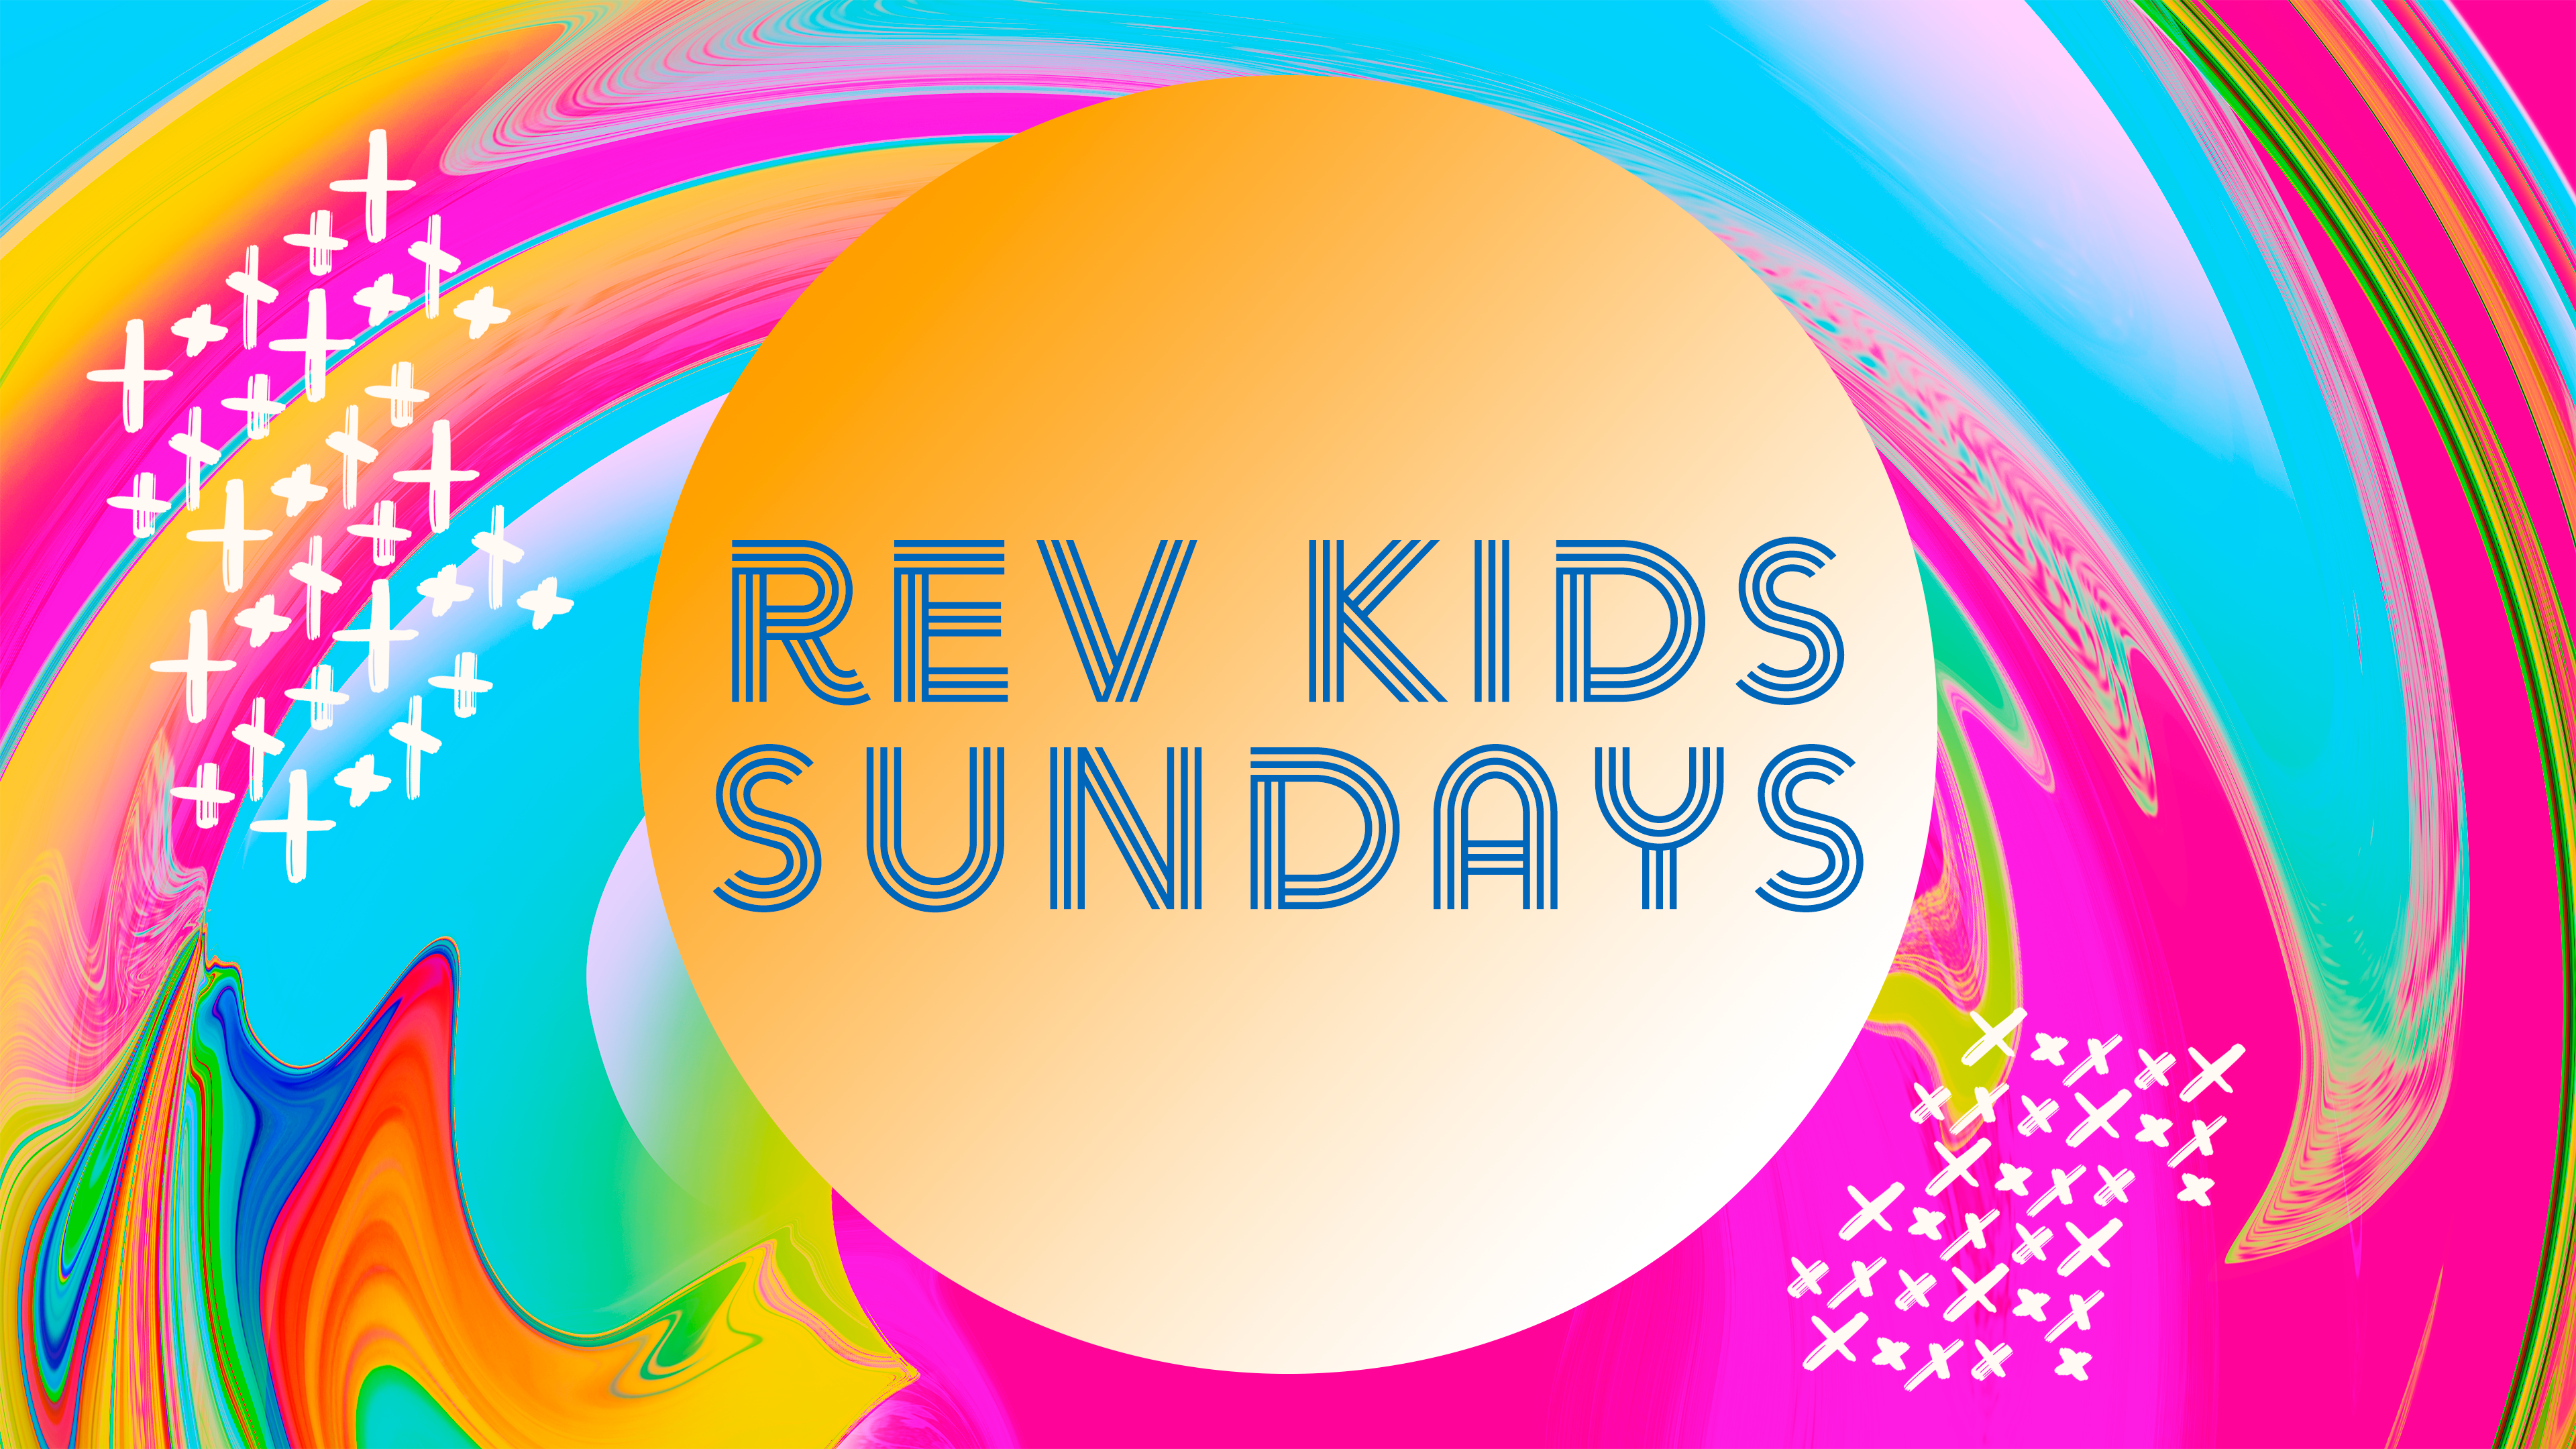 RevKids Sunday